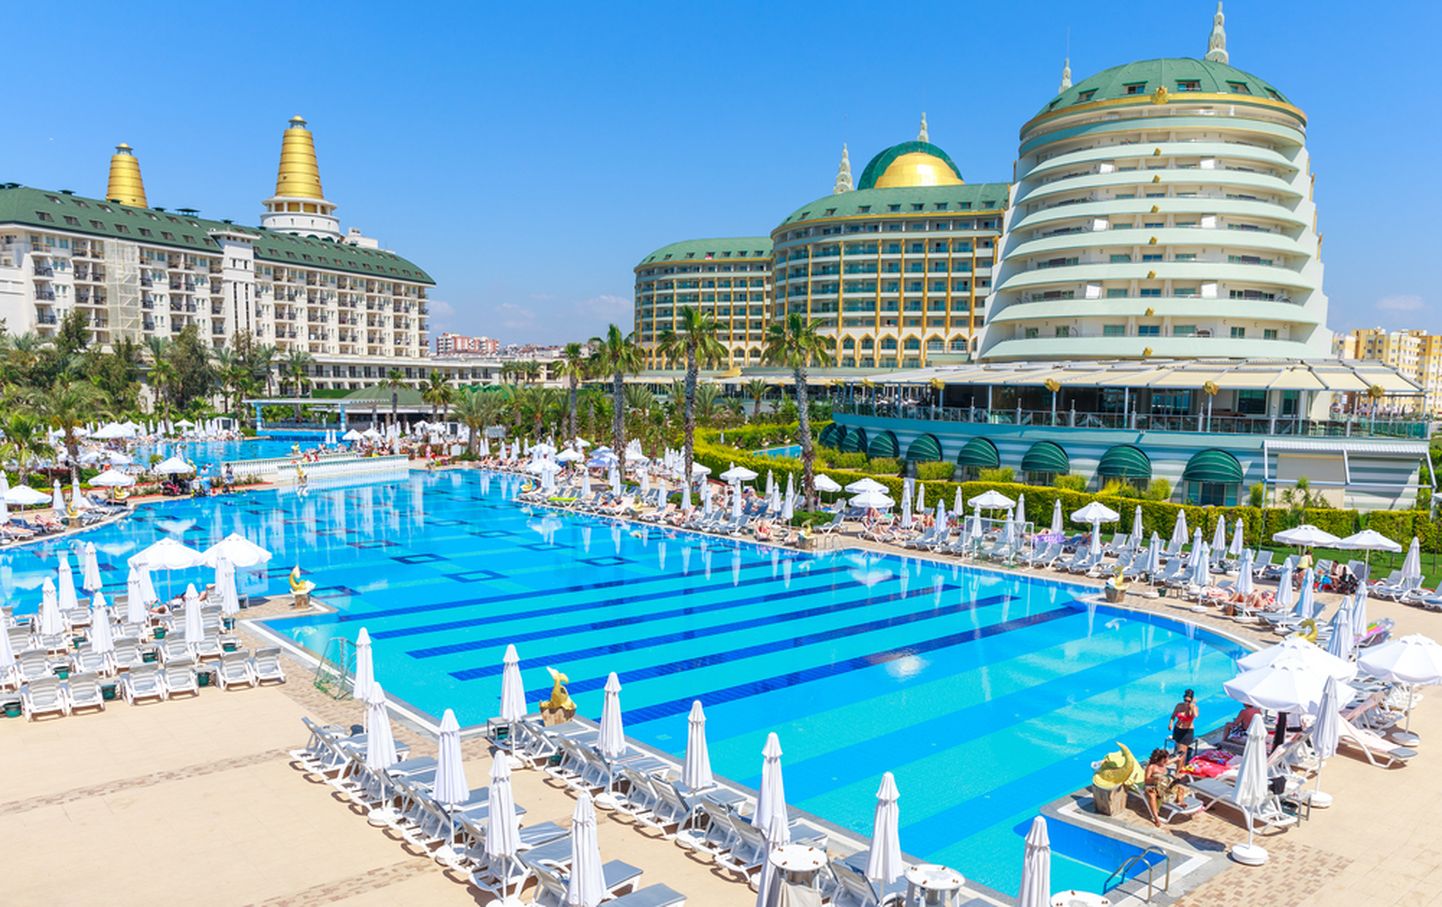 Antalya Delphin Imperiali hotell. Pilt on illusttreeriv.